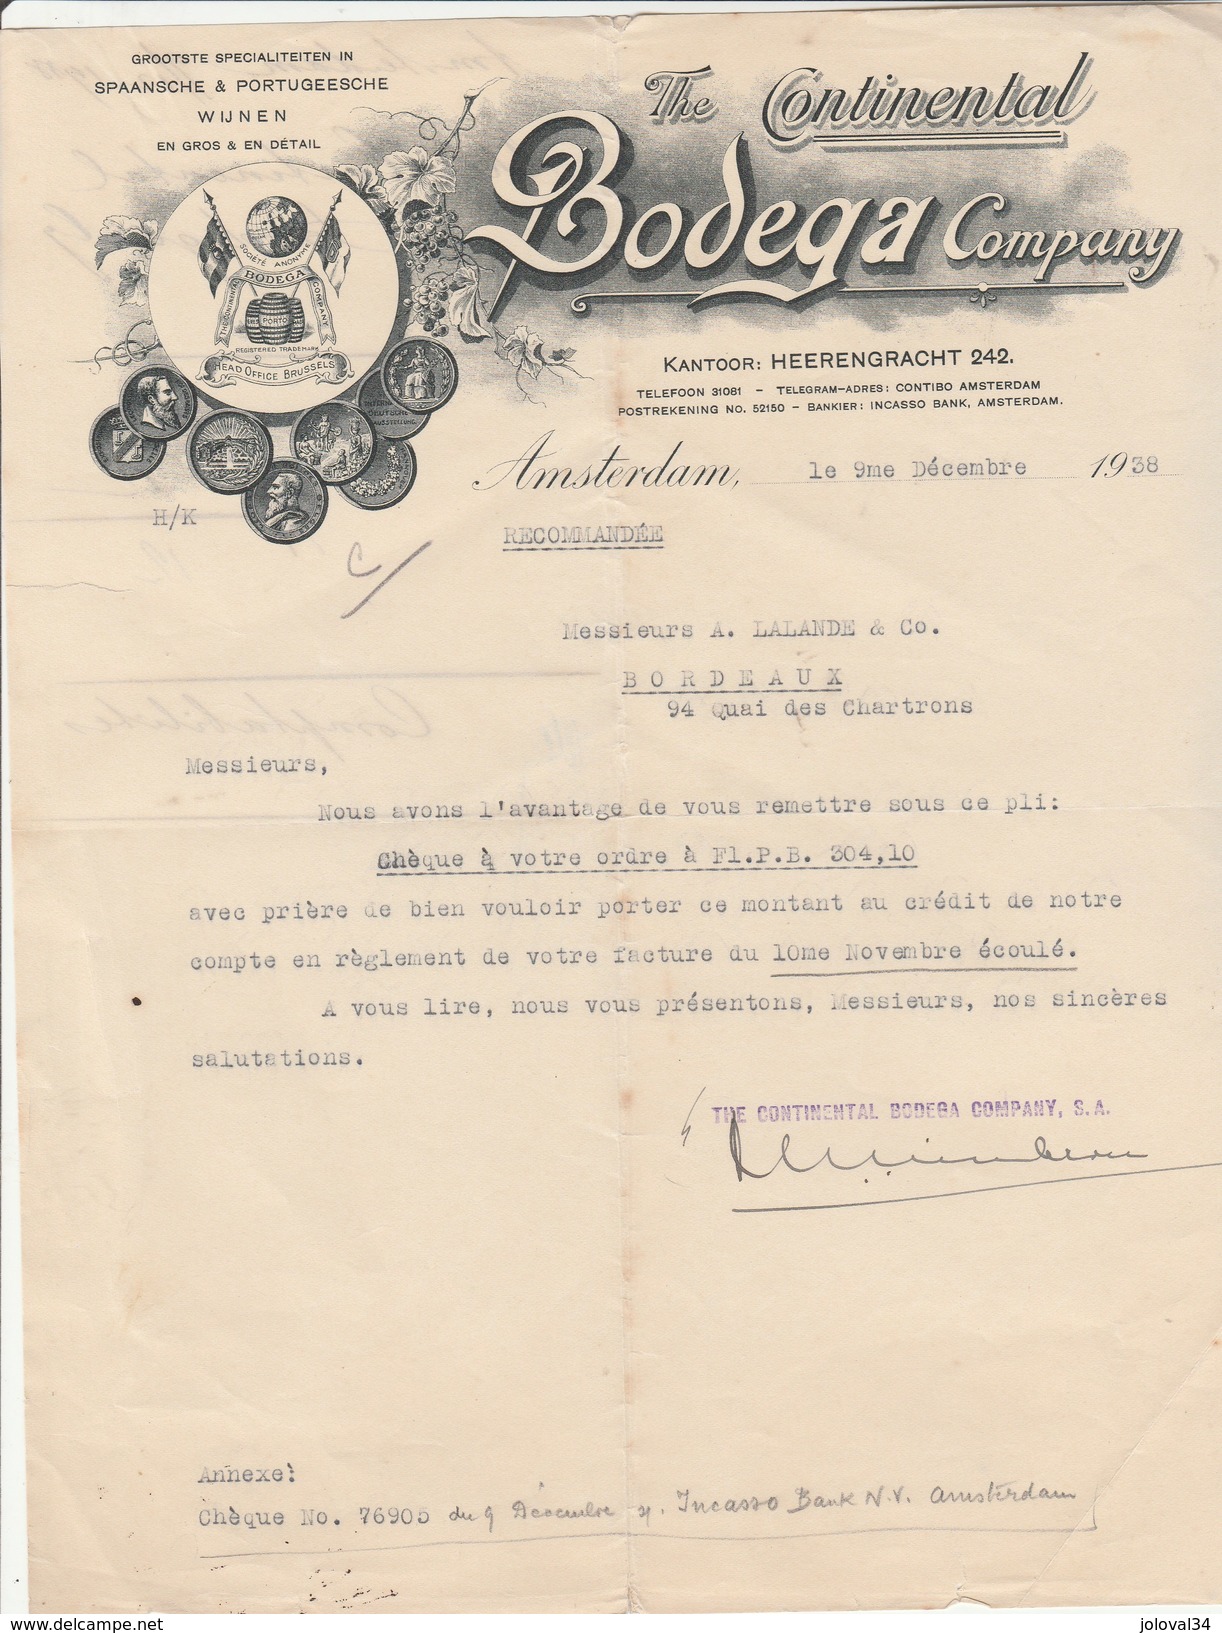 Lettre Illustrée 9/12/1938 The Continental BODEGA Company AMSTERDAM Pays Bas - Vin Espagnol Et Portugais - Nederland